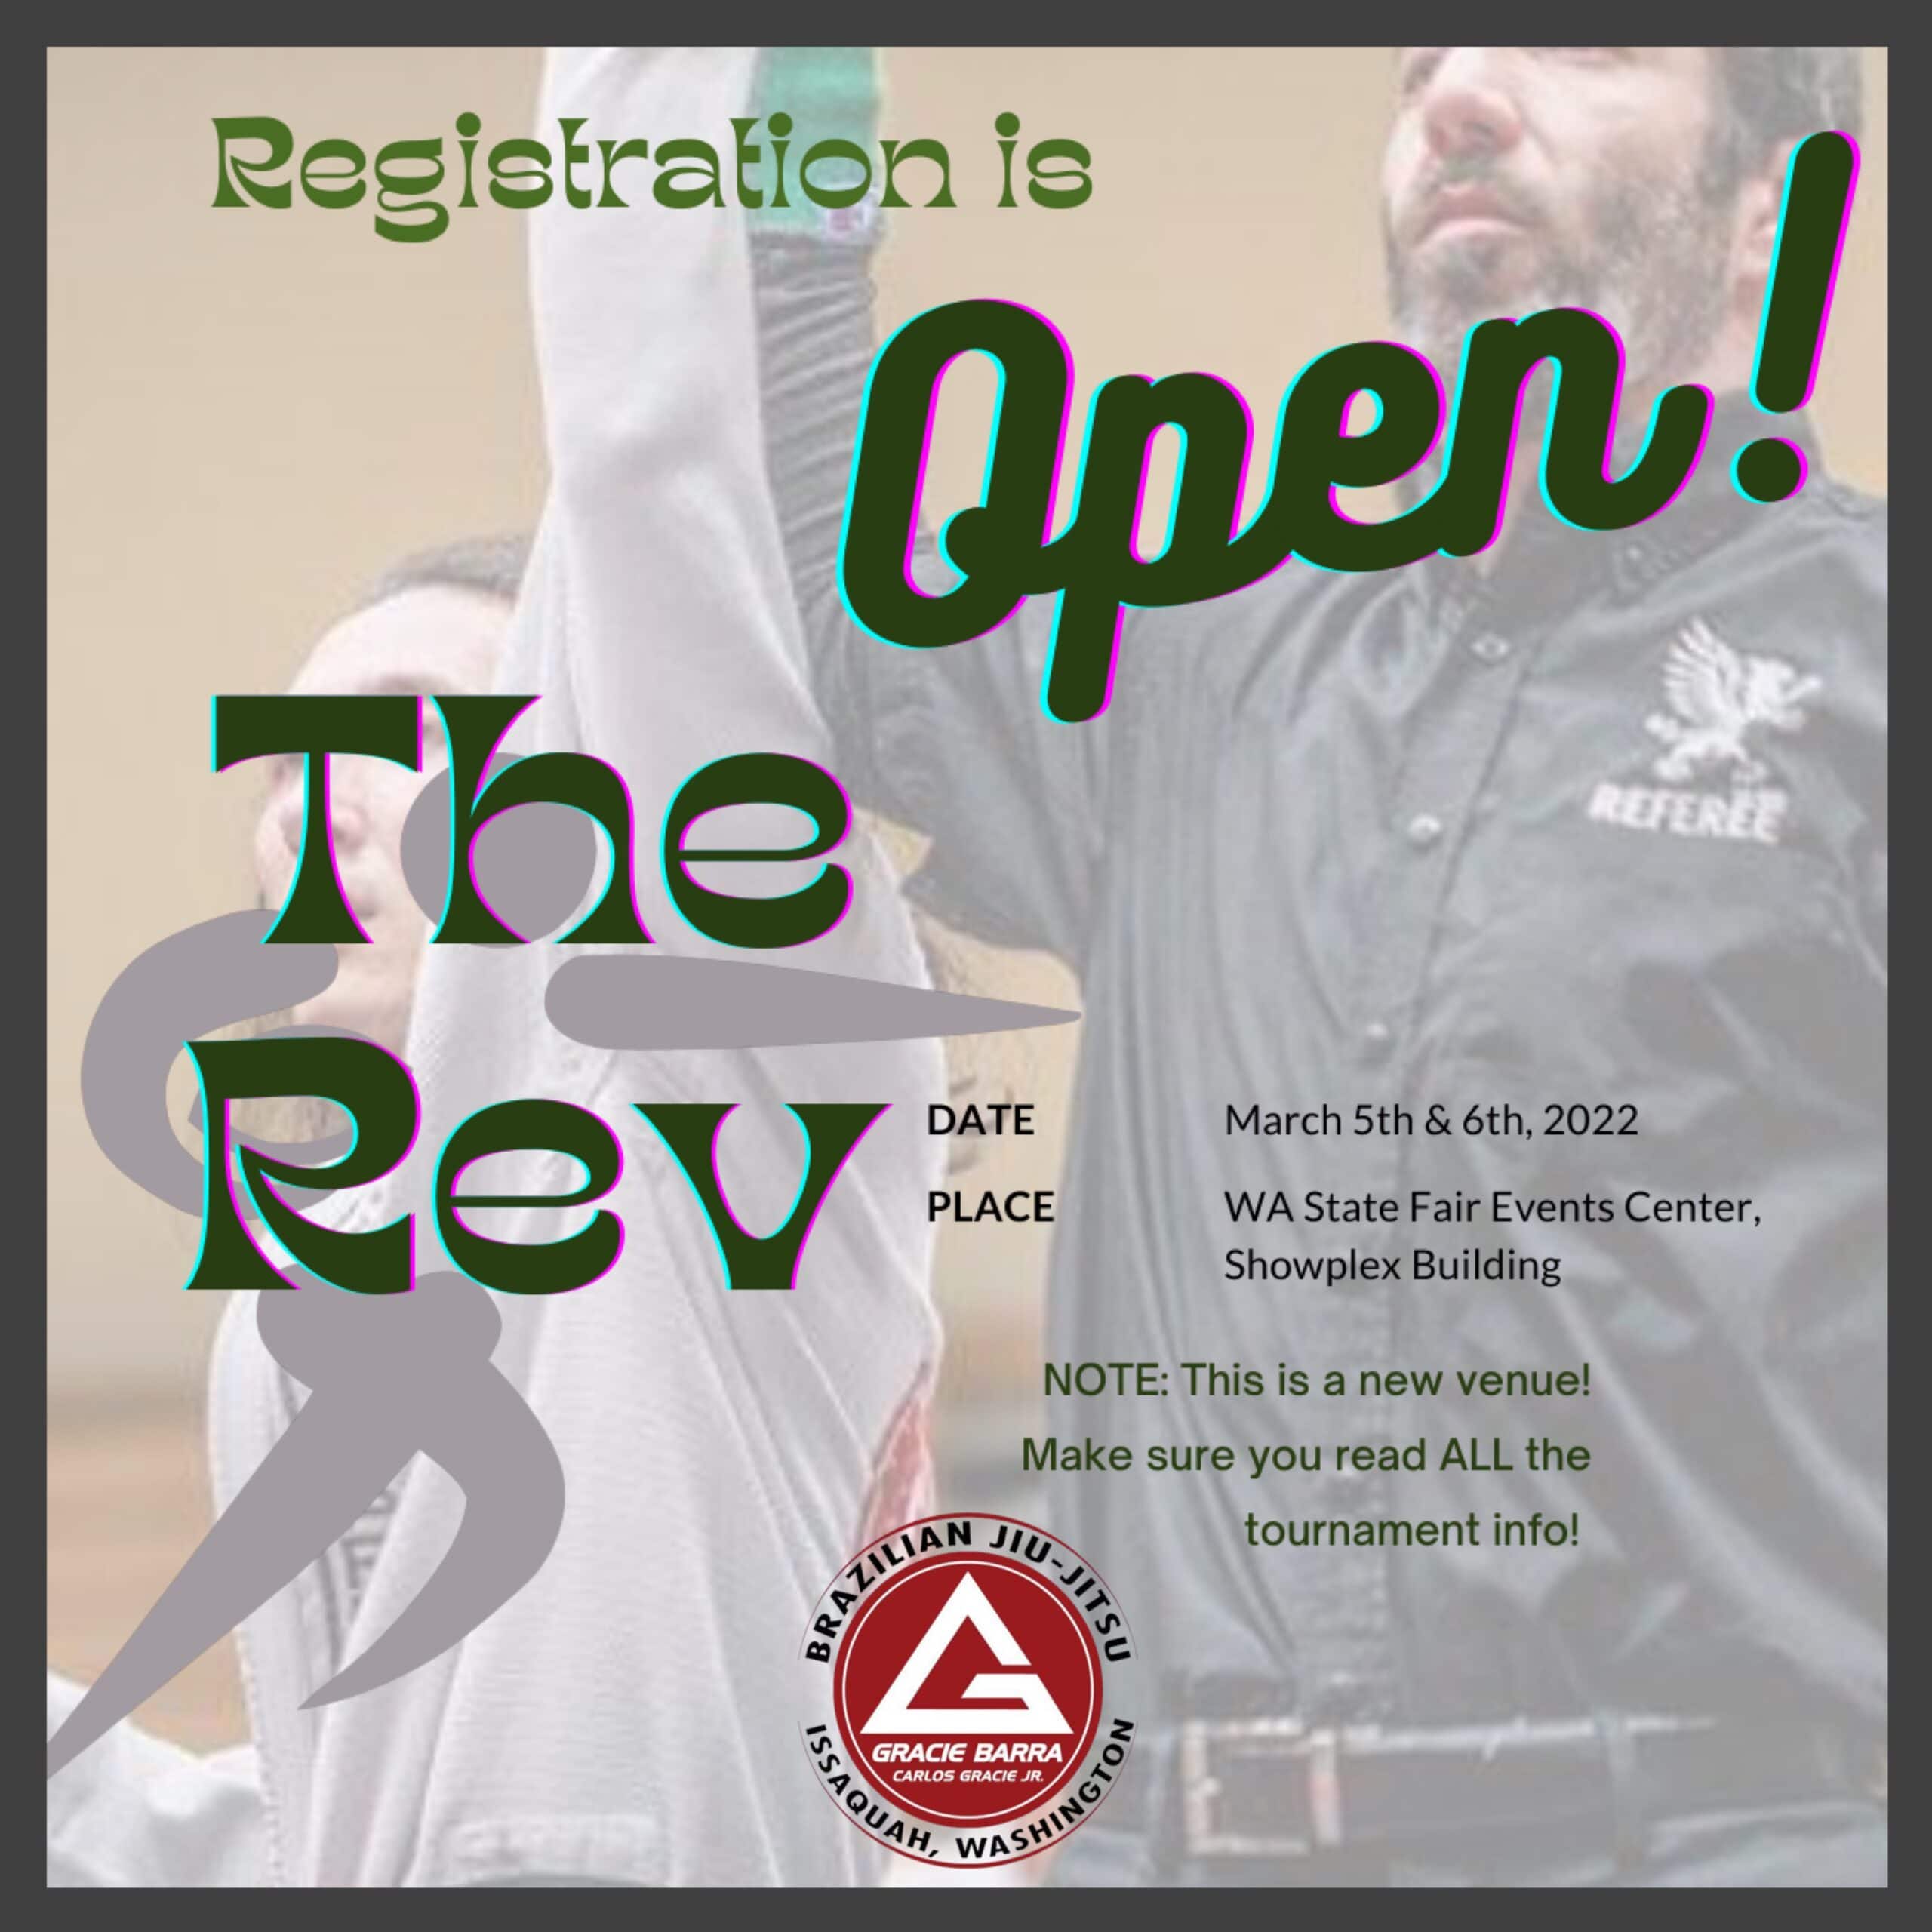 Registration is open for the revolution